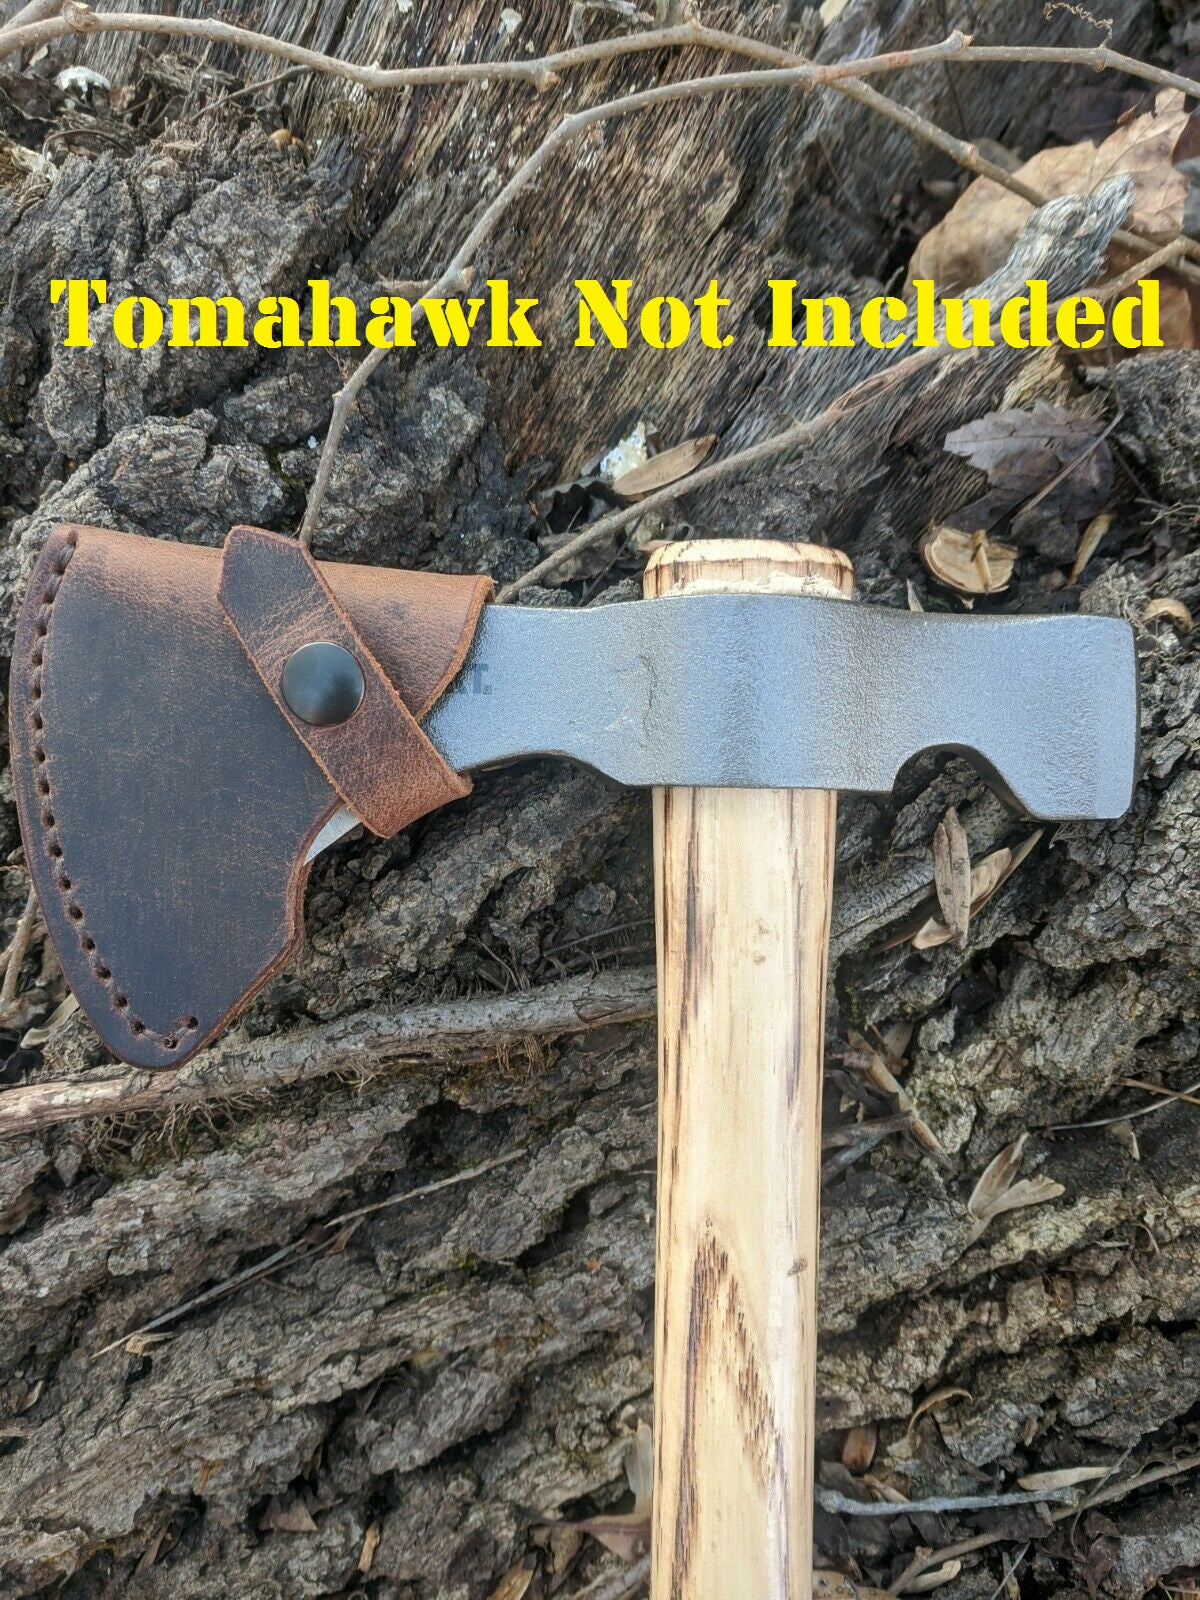 Handmade Leather Sheath For CRKT Columbia River Knife & Tool Tomahawk & Axe Models (Woods Nobo, Woods Chogan, Freyr, Birler, Pack Axe, Chogan Hatchet, Ruger Black Powder Hatchet, Chogan Hammer)